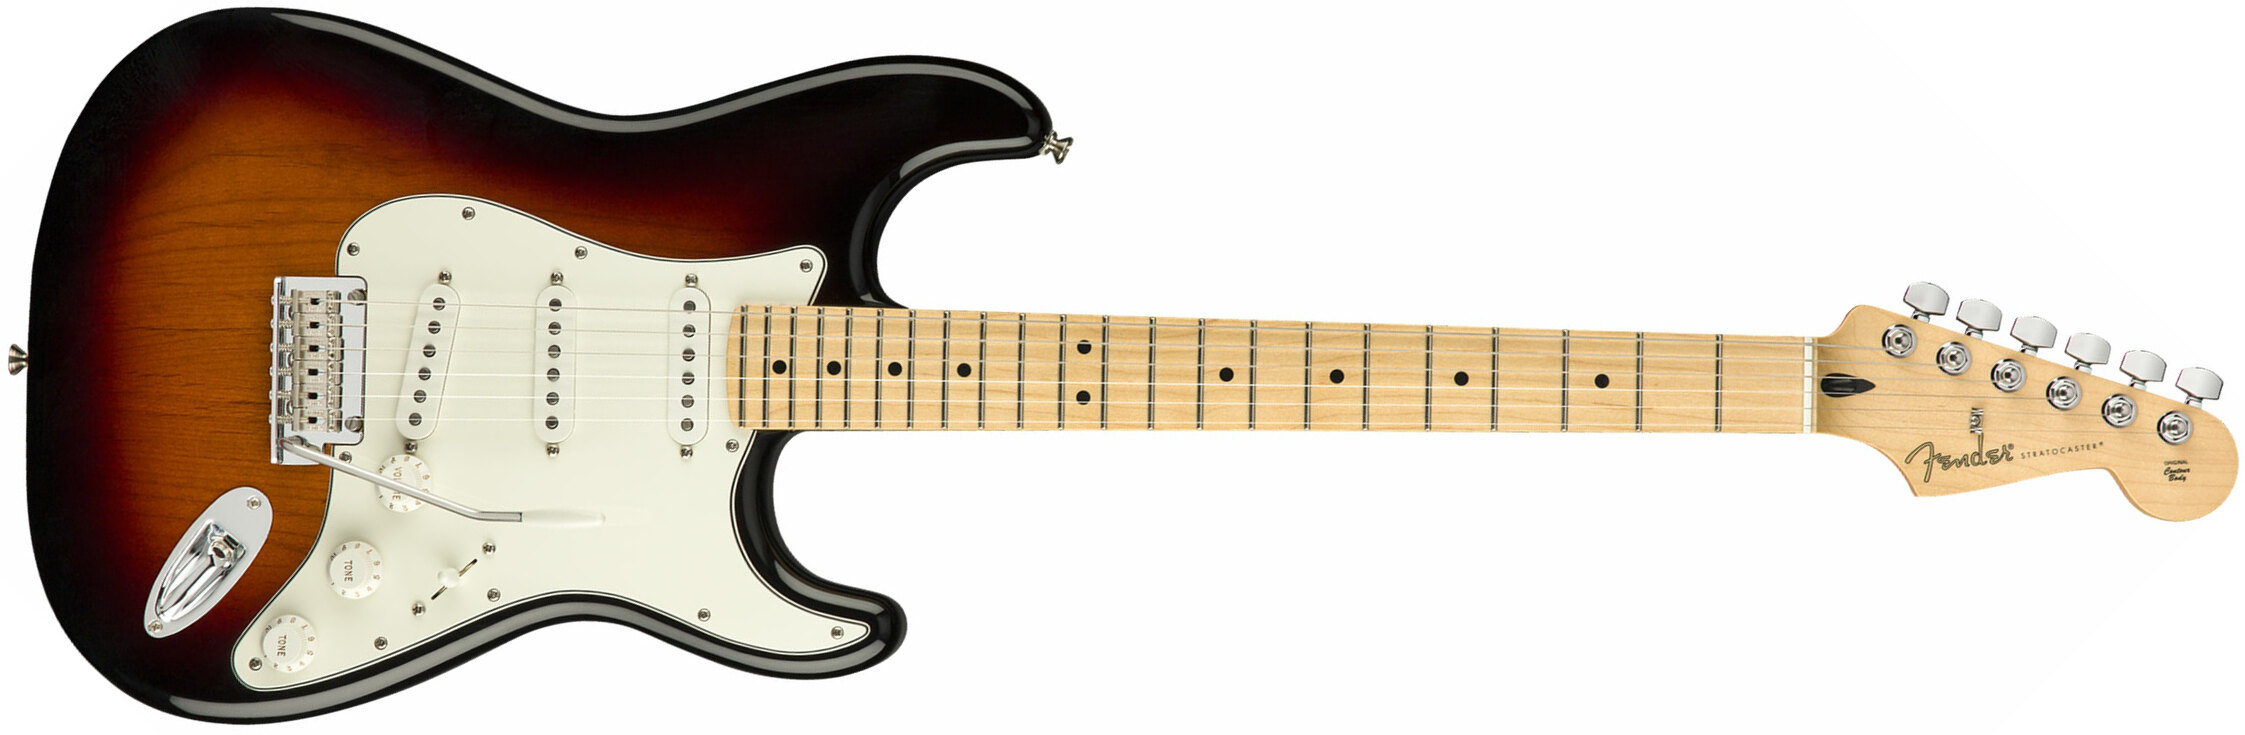 Fender Strat Player Mex Sss Mn - 3-color Sunburst - E-Gitarre in Str-Form - Main picture